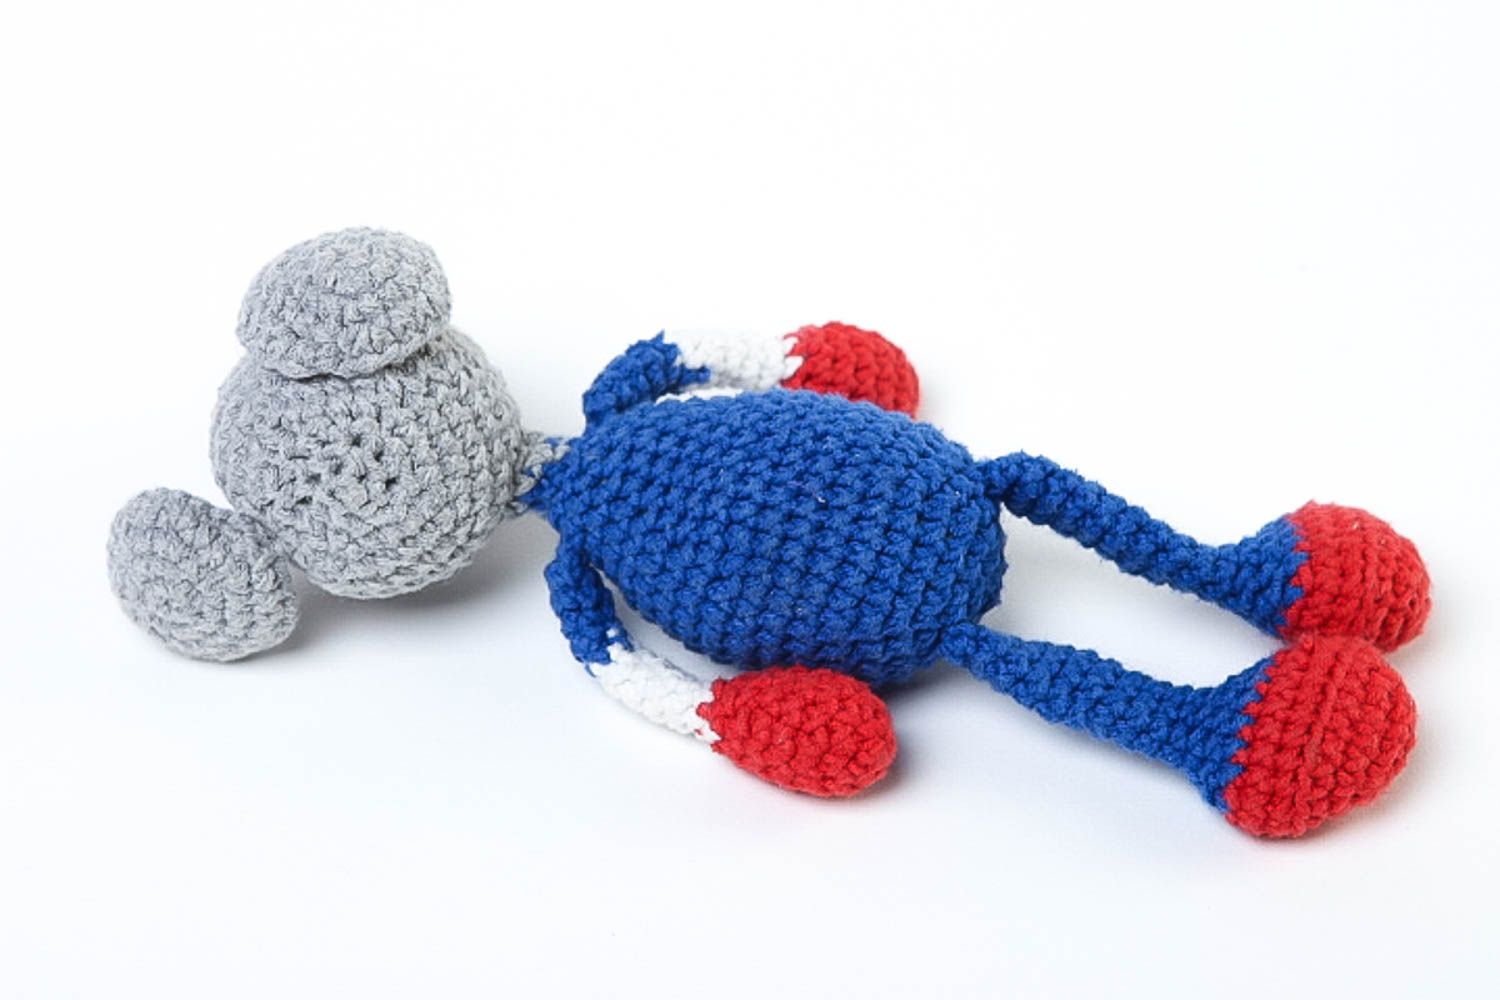 Handmade crocheted toy for children crocheted doll nursery decor ideas photo 4